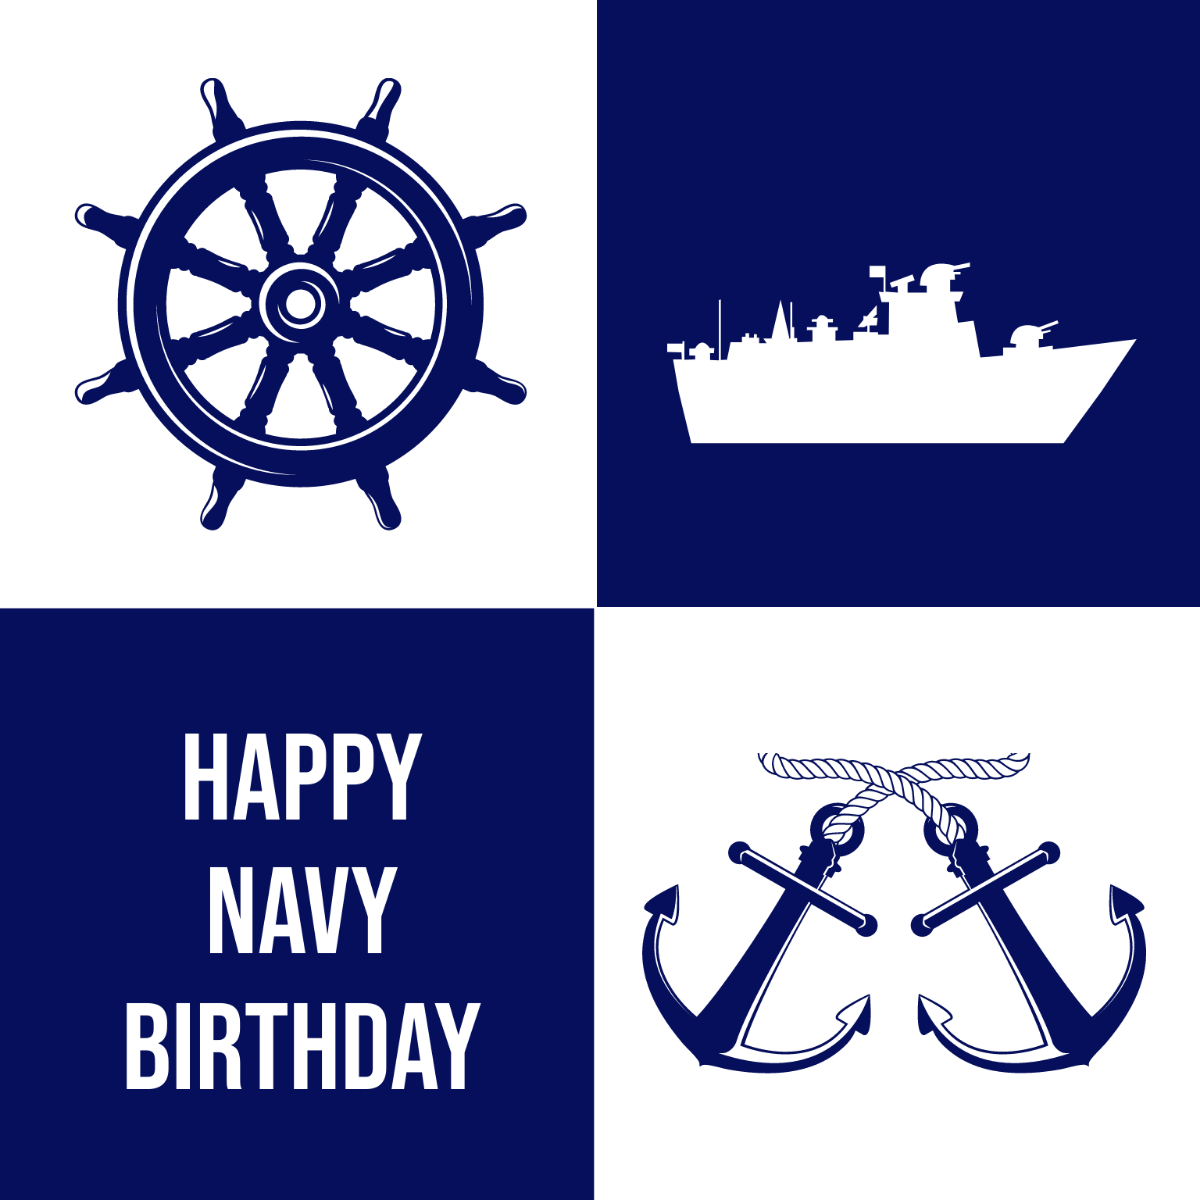 Free Navy Birthday Illustration Template